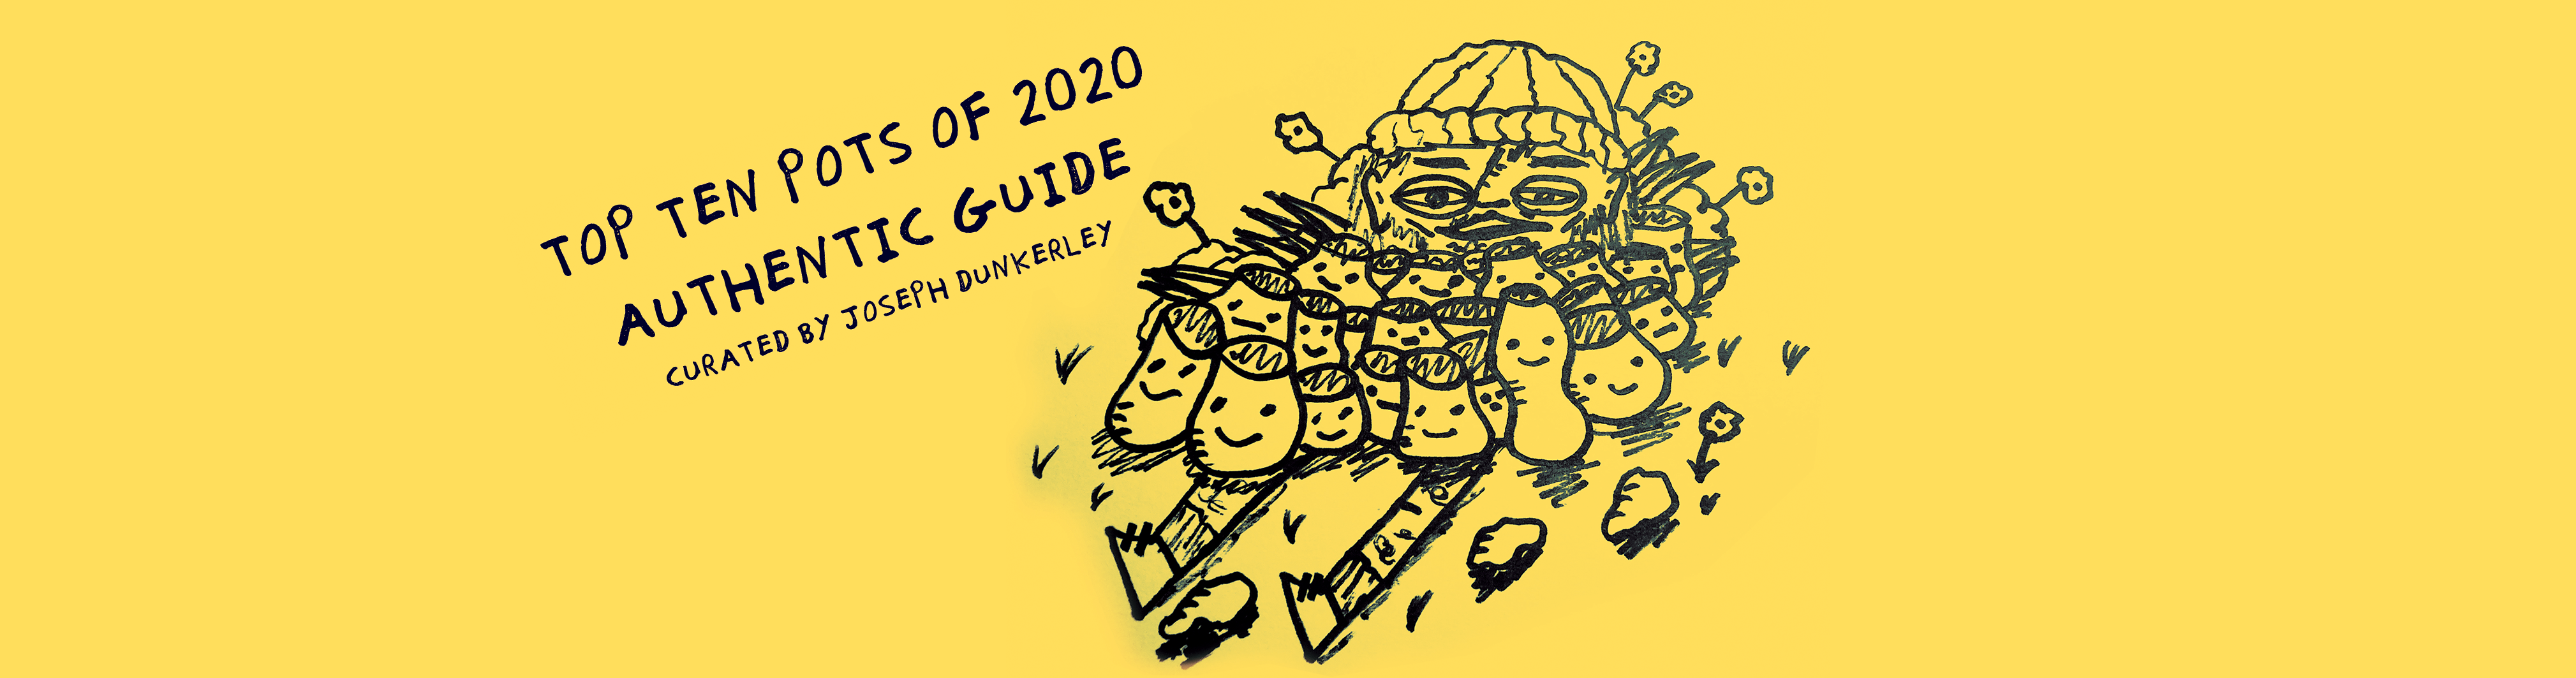 Top Ten Pots of 2020 Authentic Guide